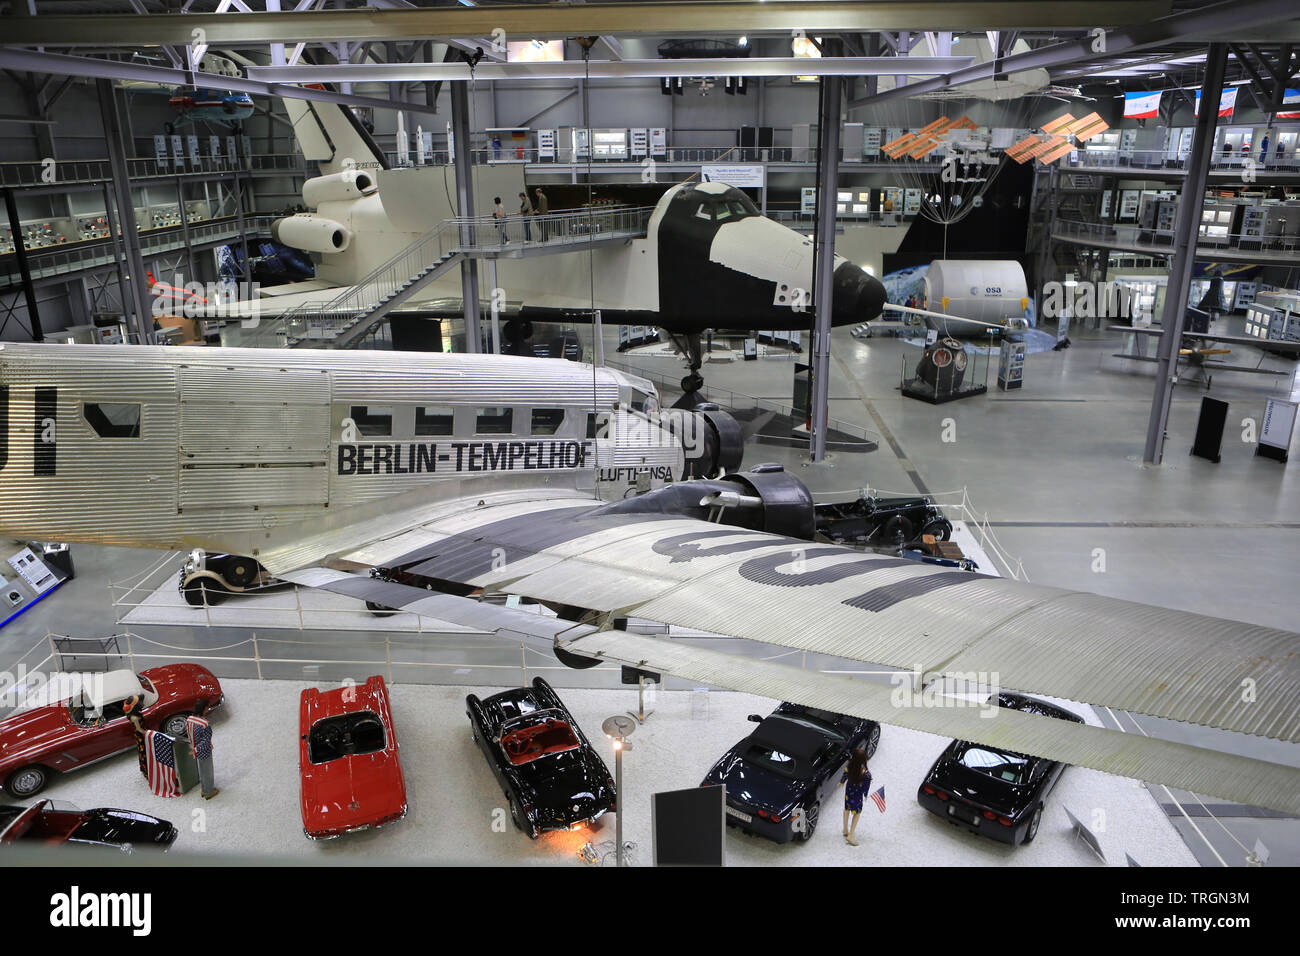 Berlin-Tempelhof Lufthansa. Exposición "Apollo y más allá". Musée des techniques de chapitel. Technik Museum Speyer. Allemagne. Foto de stock